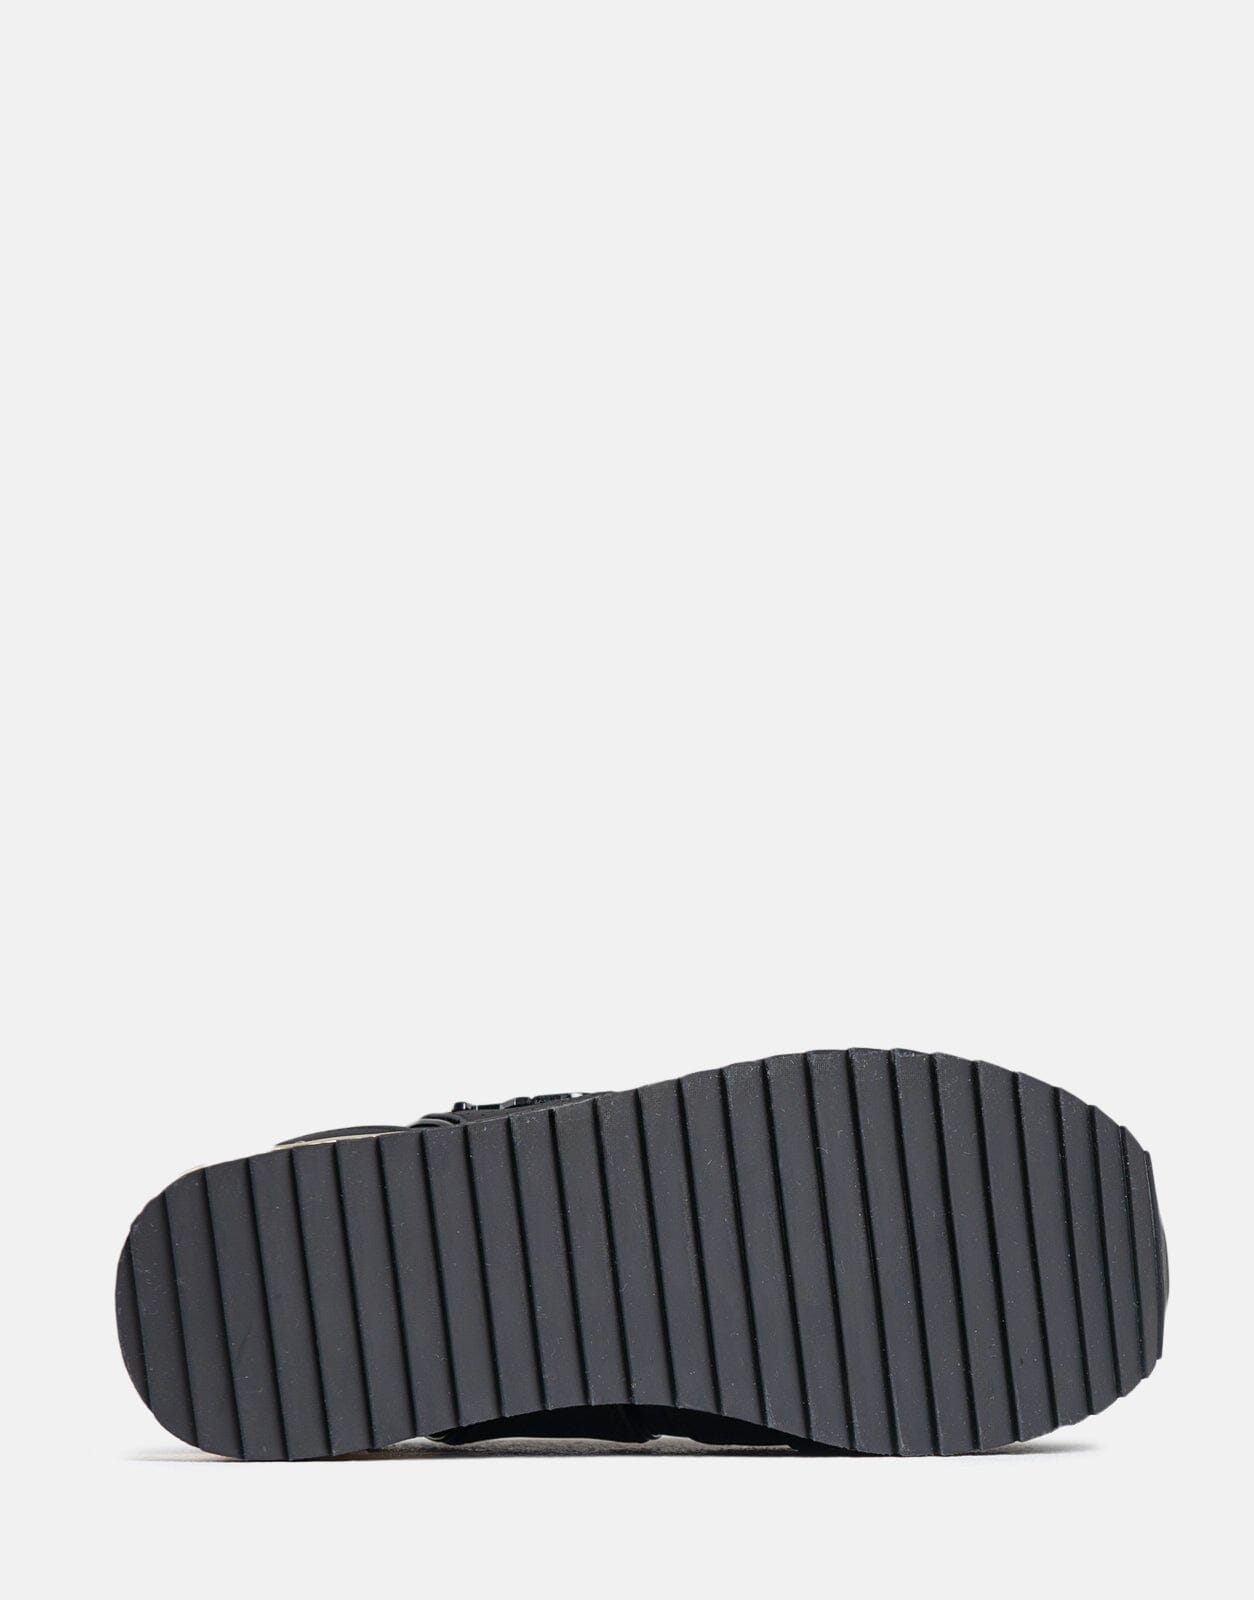 Replay Penny Bloc Sneakers Black - Subwear